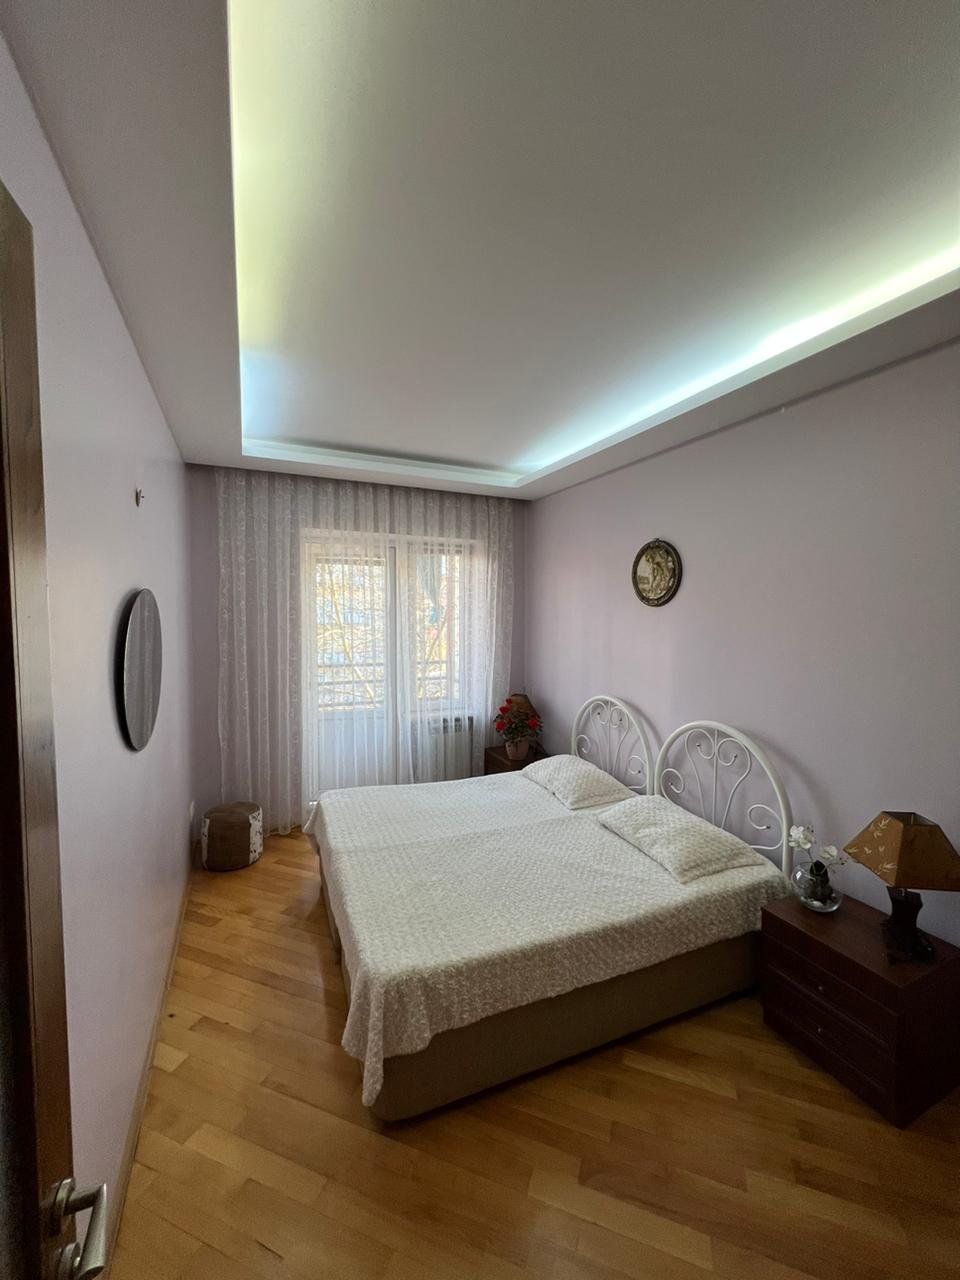 1-bedroom apartment in the center of Batumi id-1090 - Batumi Vacation Rentals